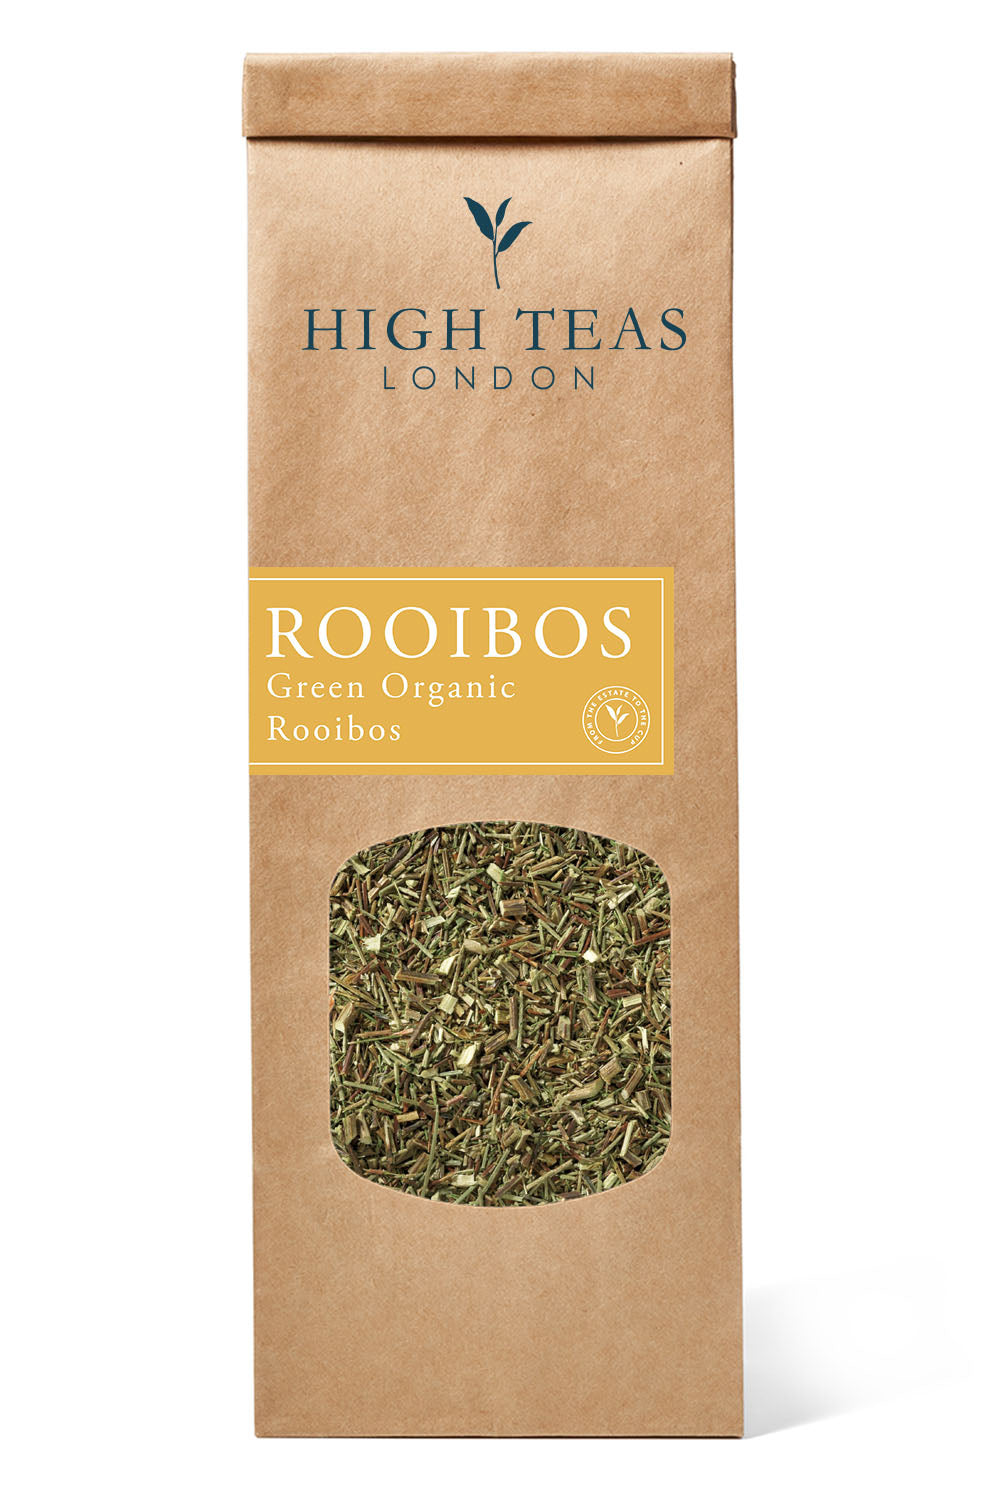 Green Organic Rooibos-50g-Loose Leaf Tea-High Teas